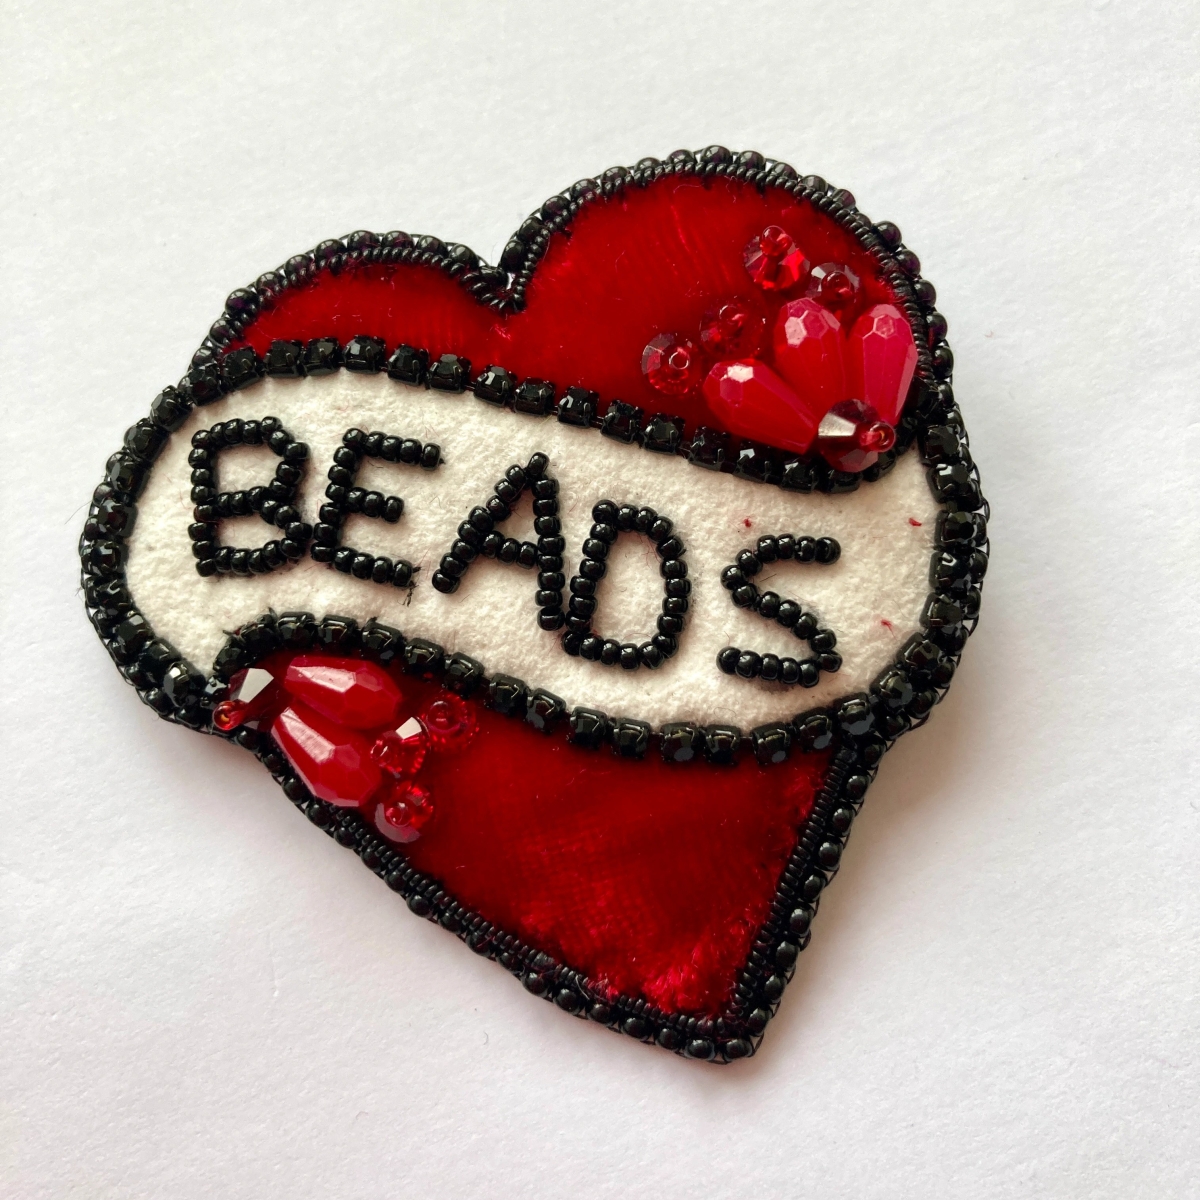 IBW ‘I Heart Beads’ – Version 1